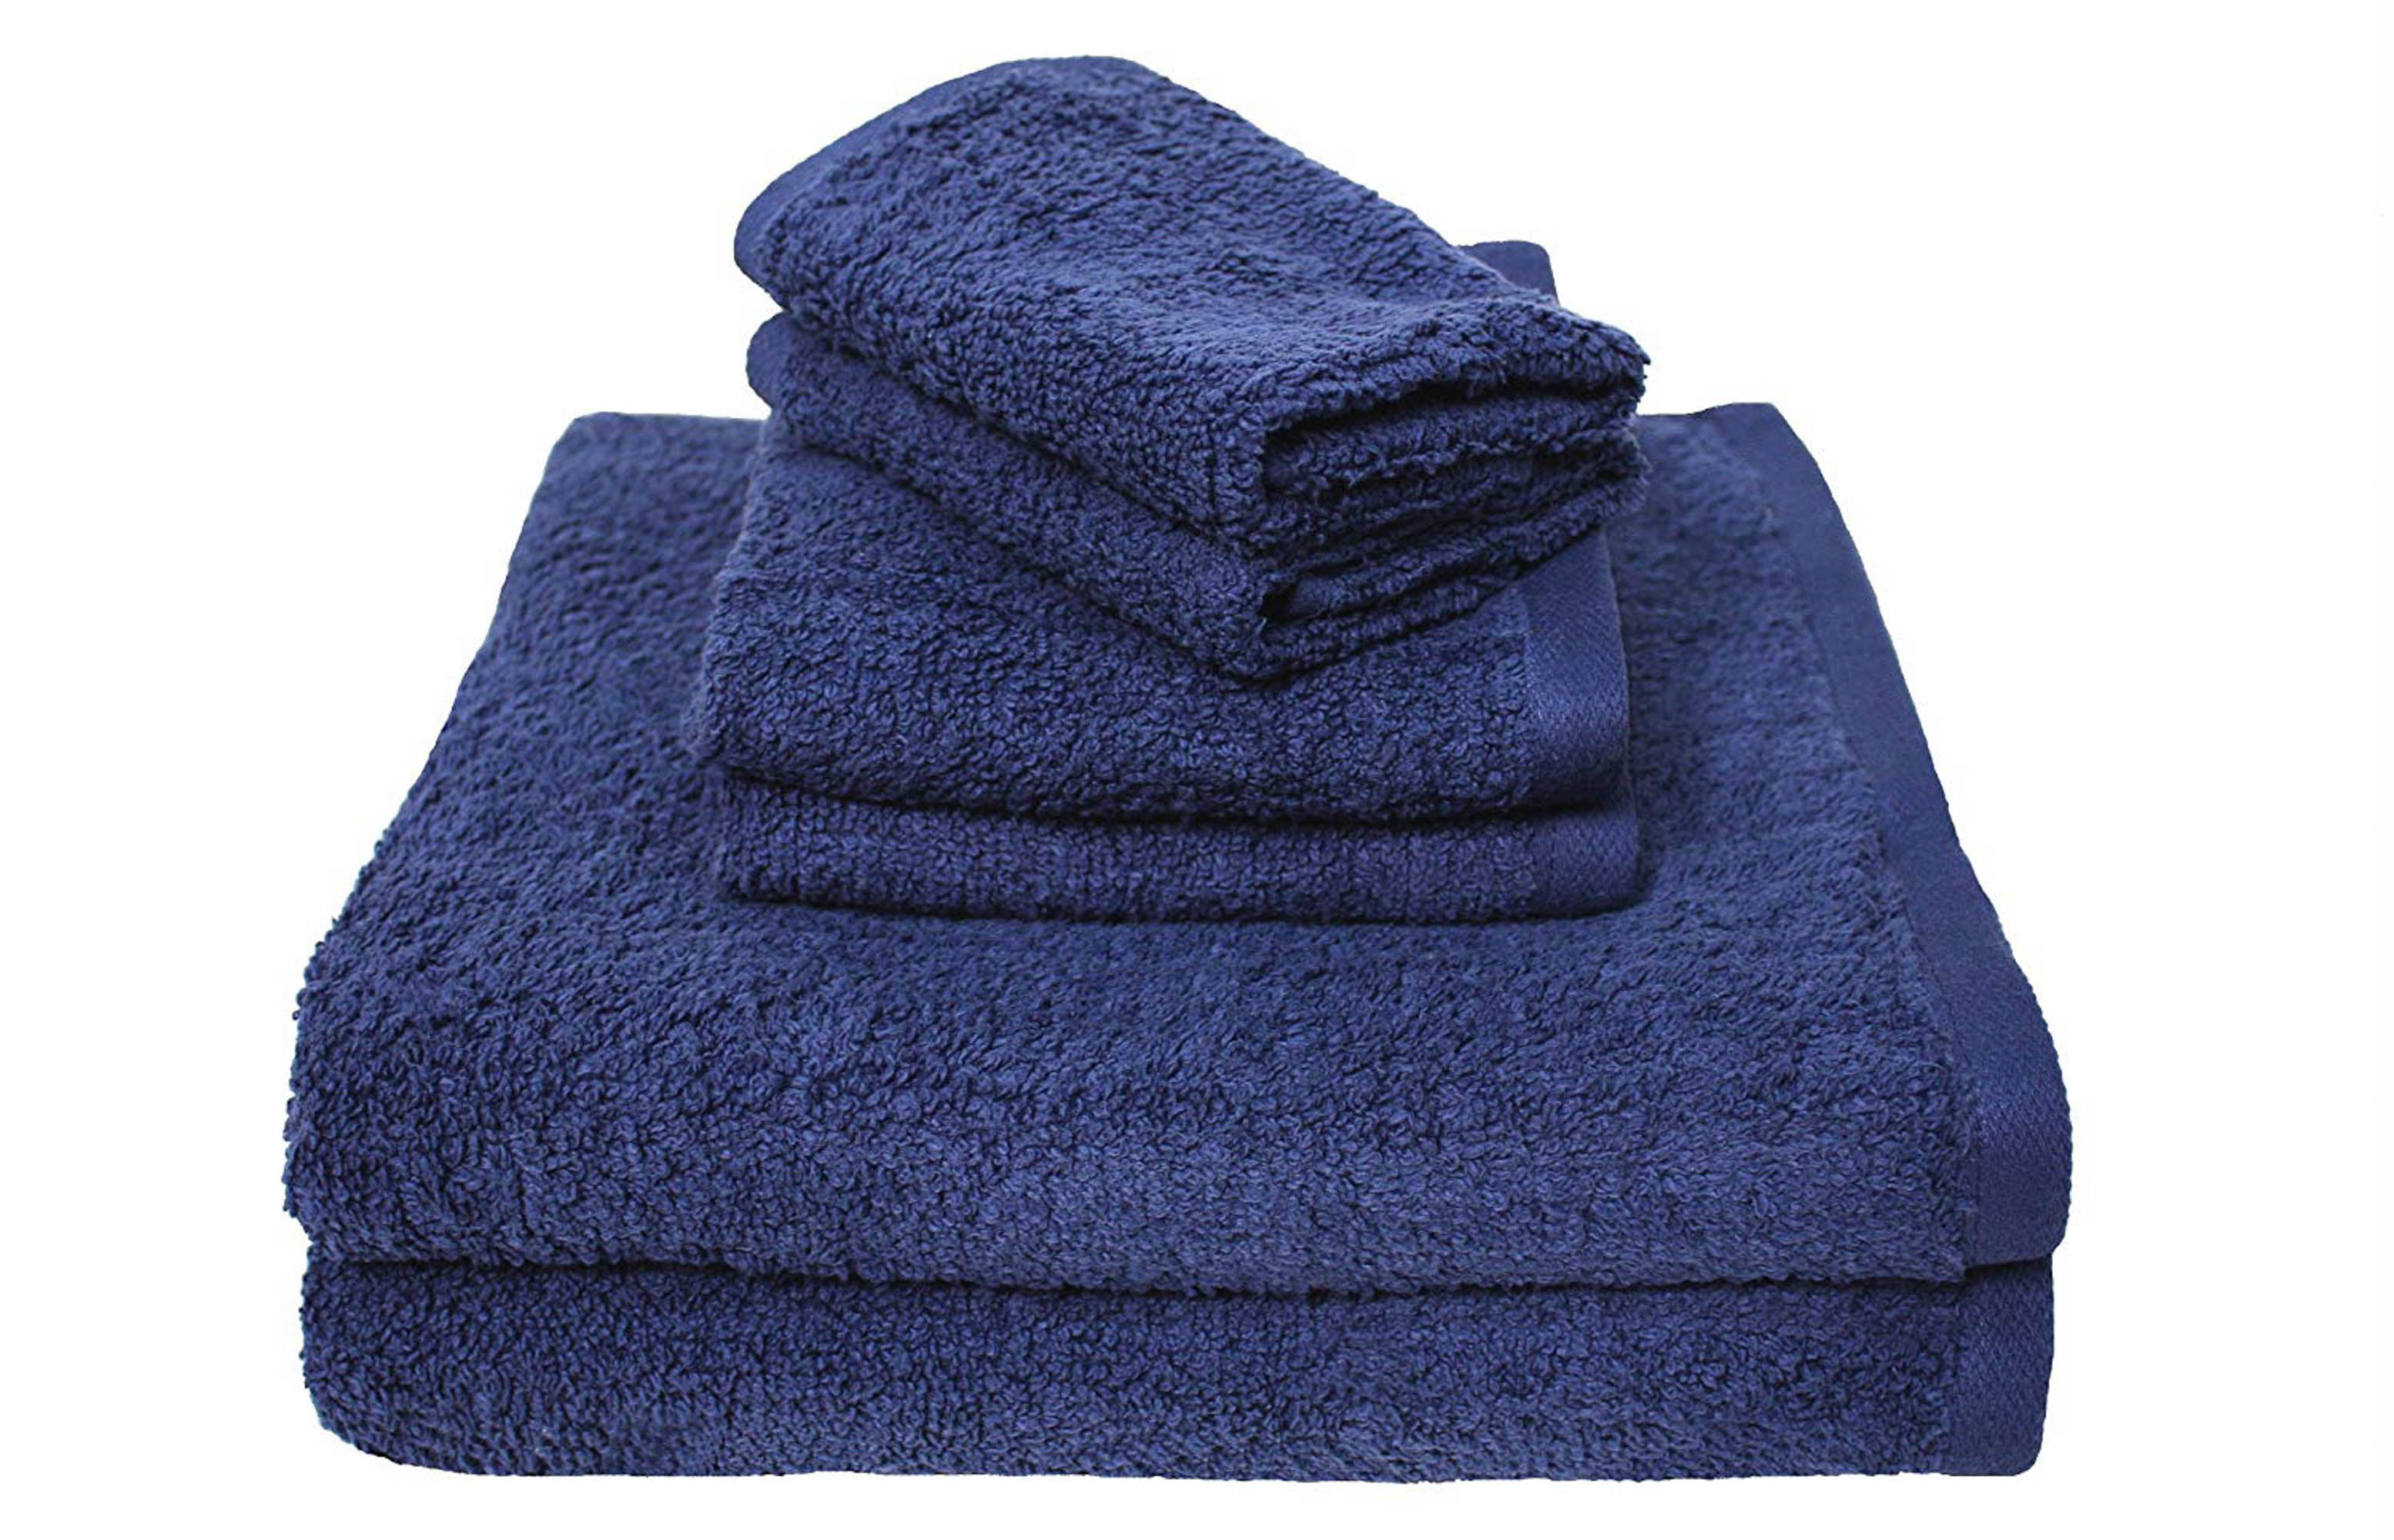 travel bath towel lightweight